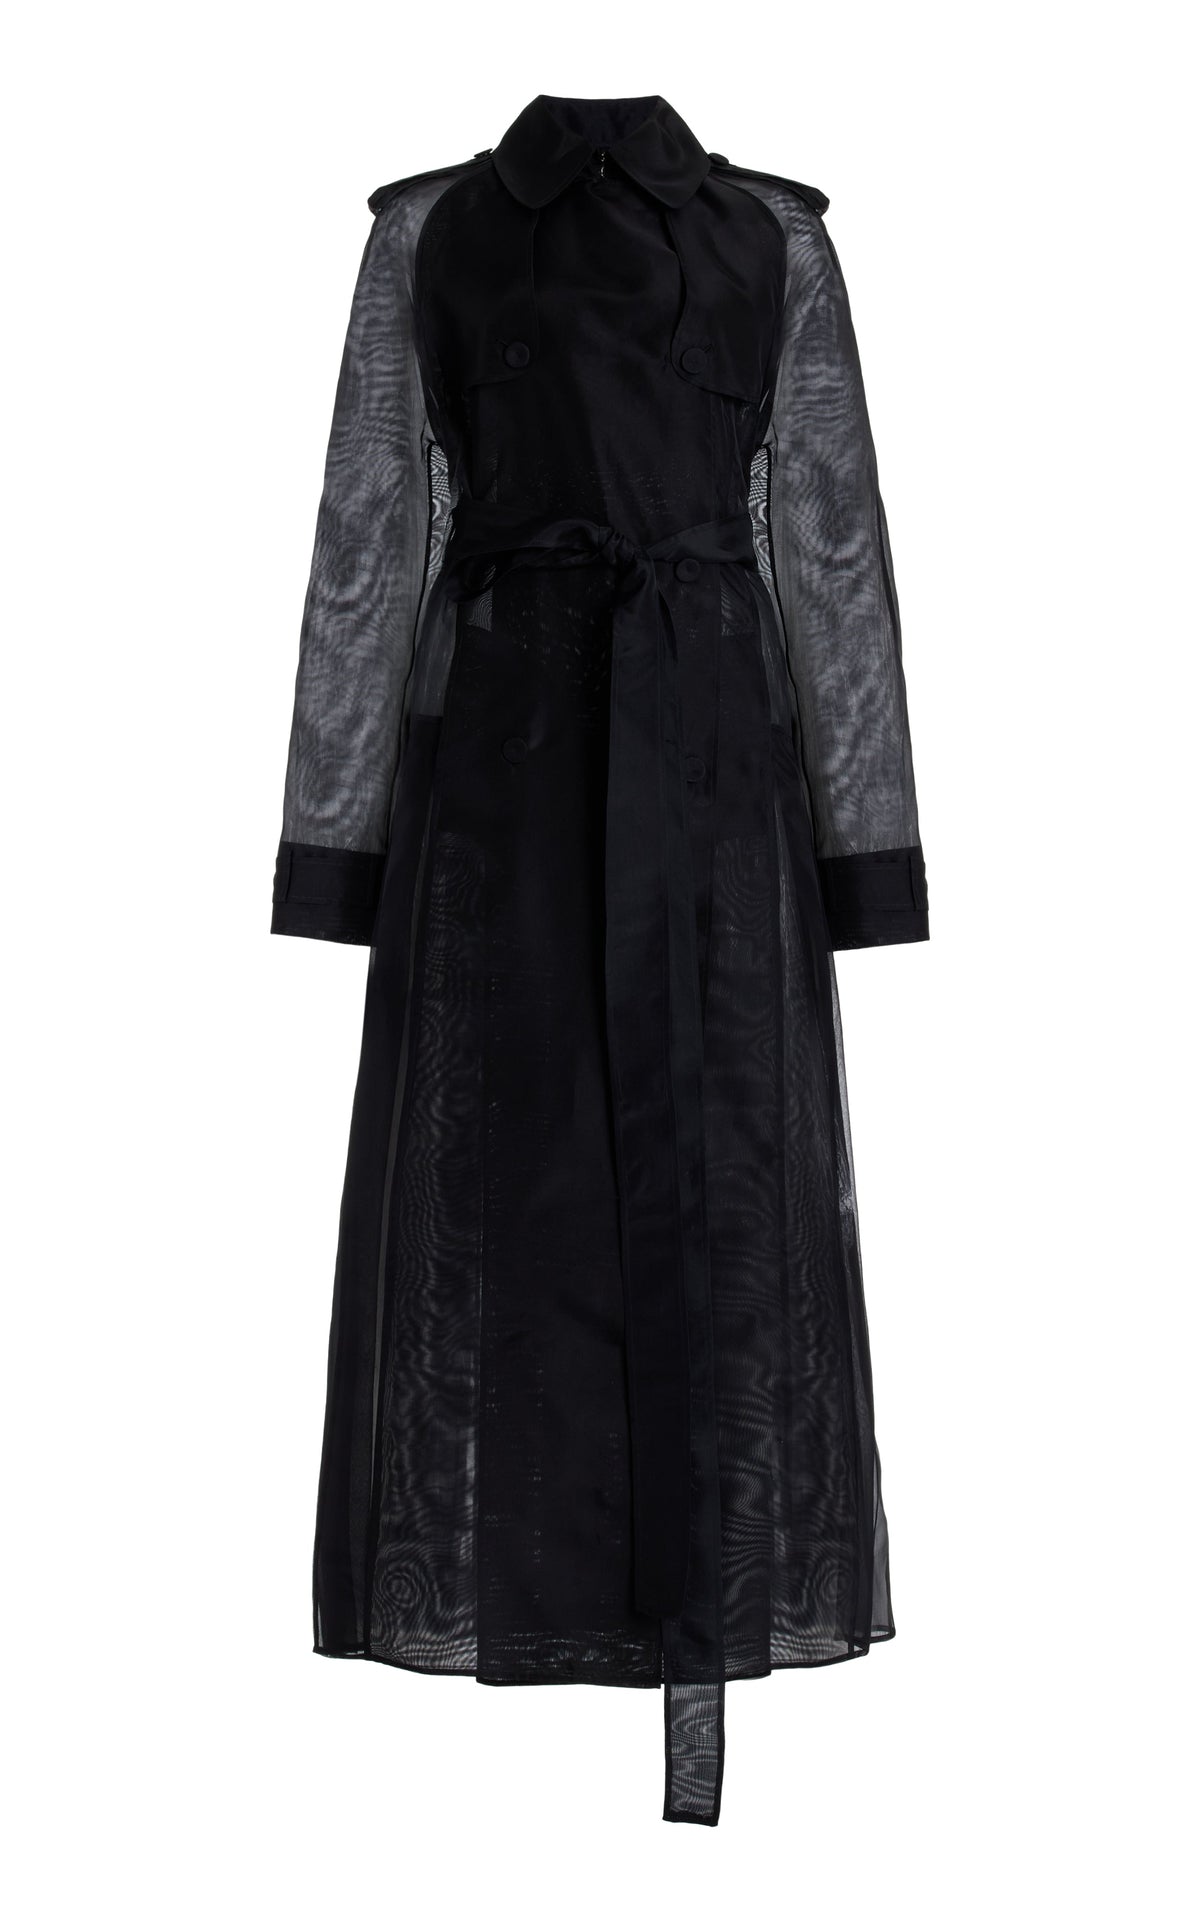 Eithne Sheer Trench Coat in Black Silk Organza